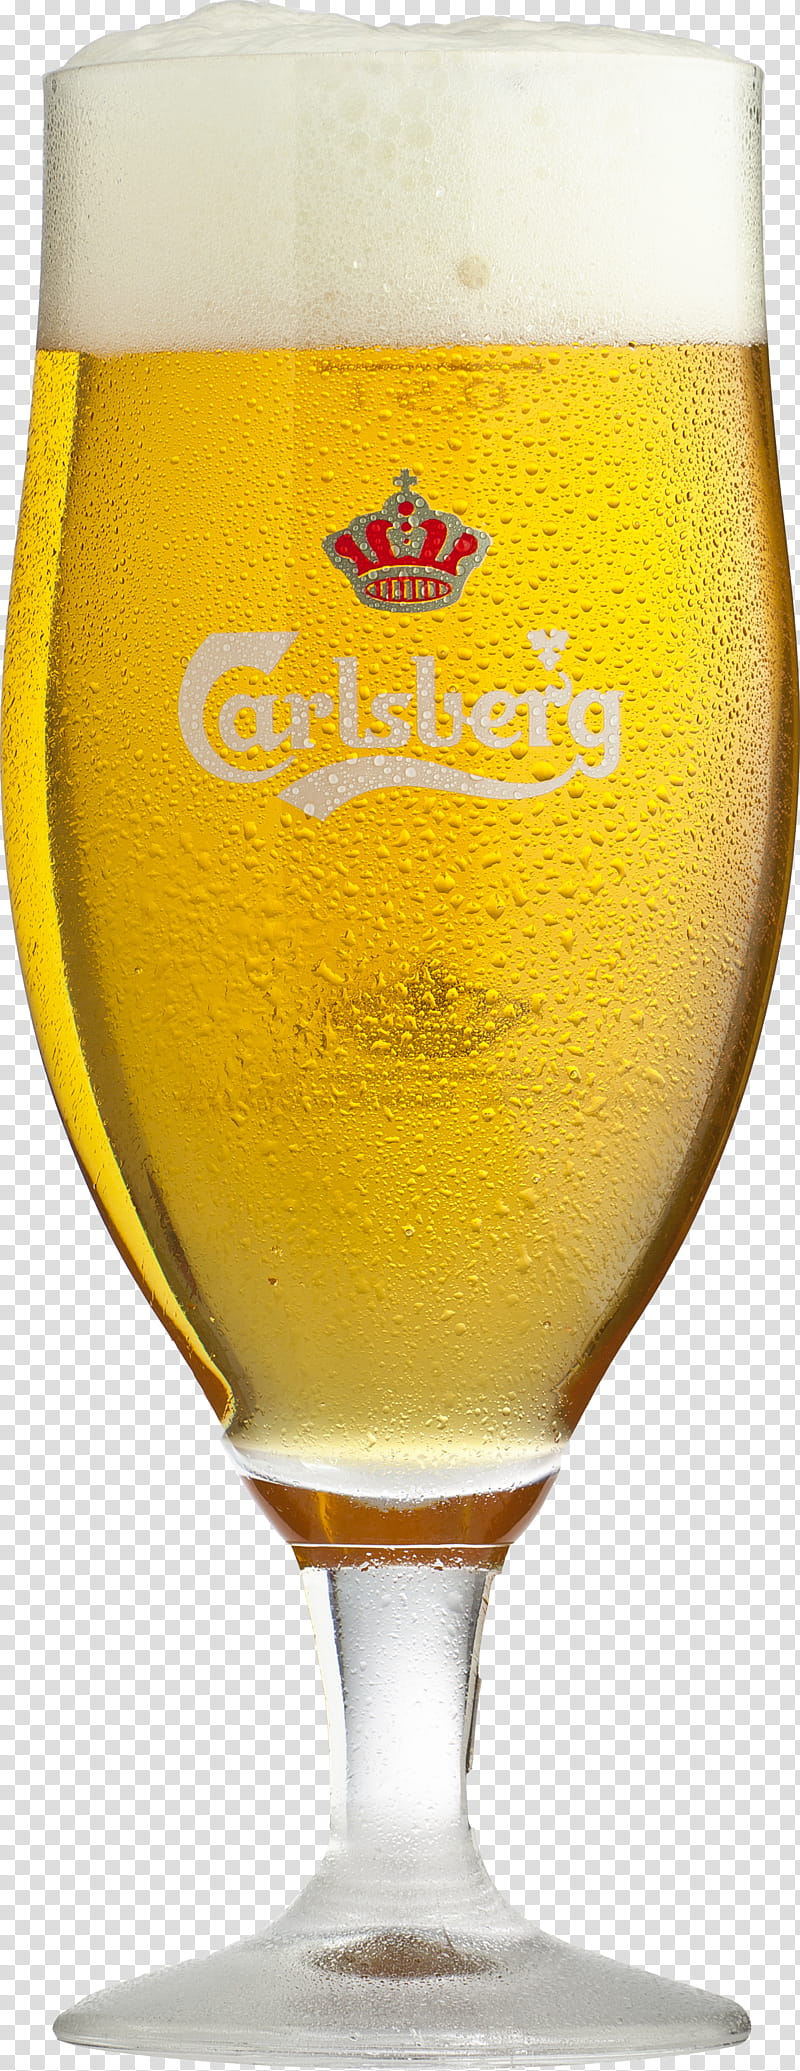 Champagne Glasses, Carlsberg Group, Pilsner, Tuborg Brewery, Beer, Carlsberg Danmark, Draught Beer, Heineken transparent background PNG clipart